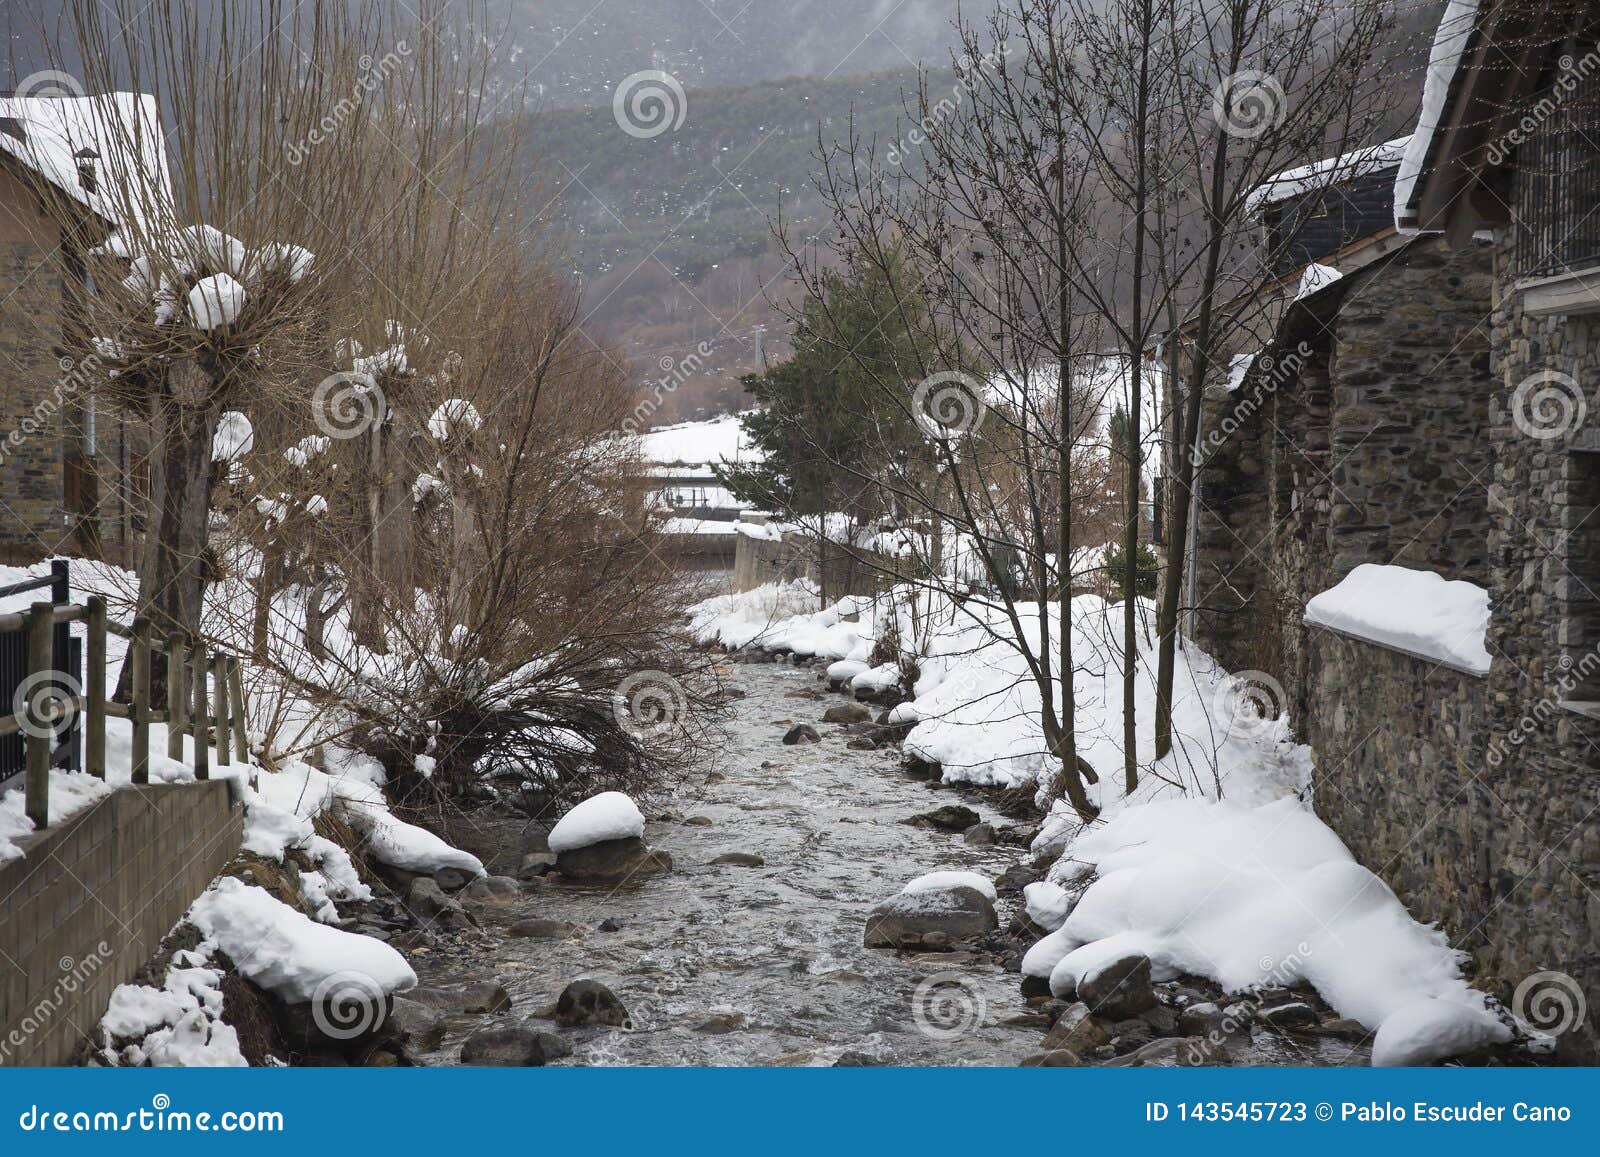 escrita river as it passes through espot in winter.